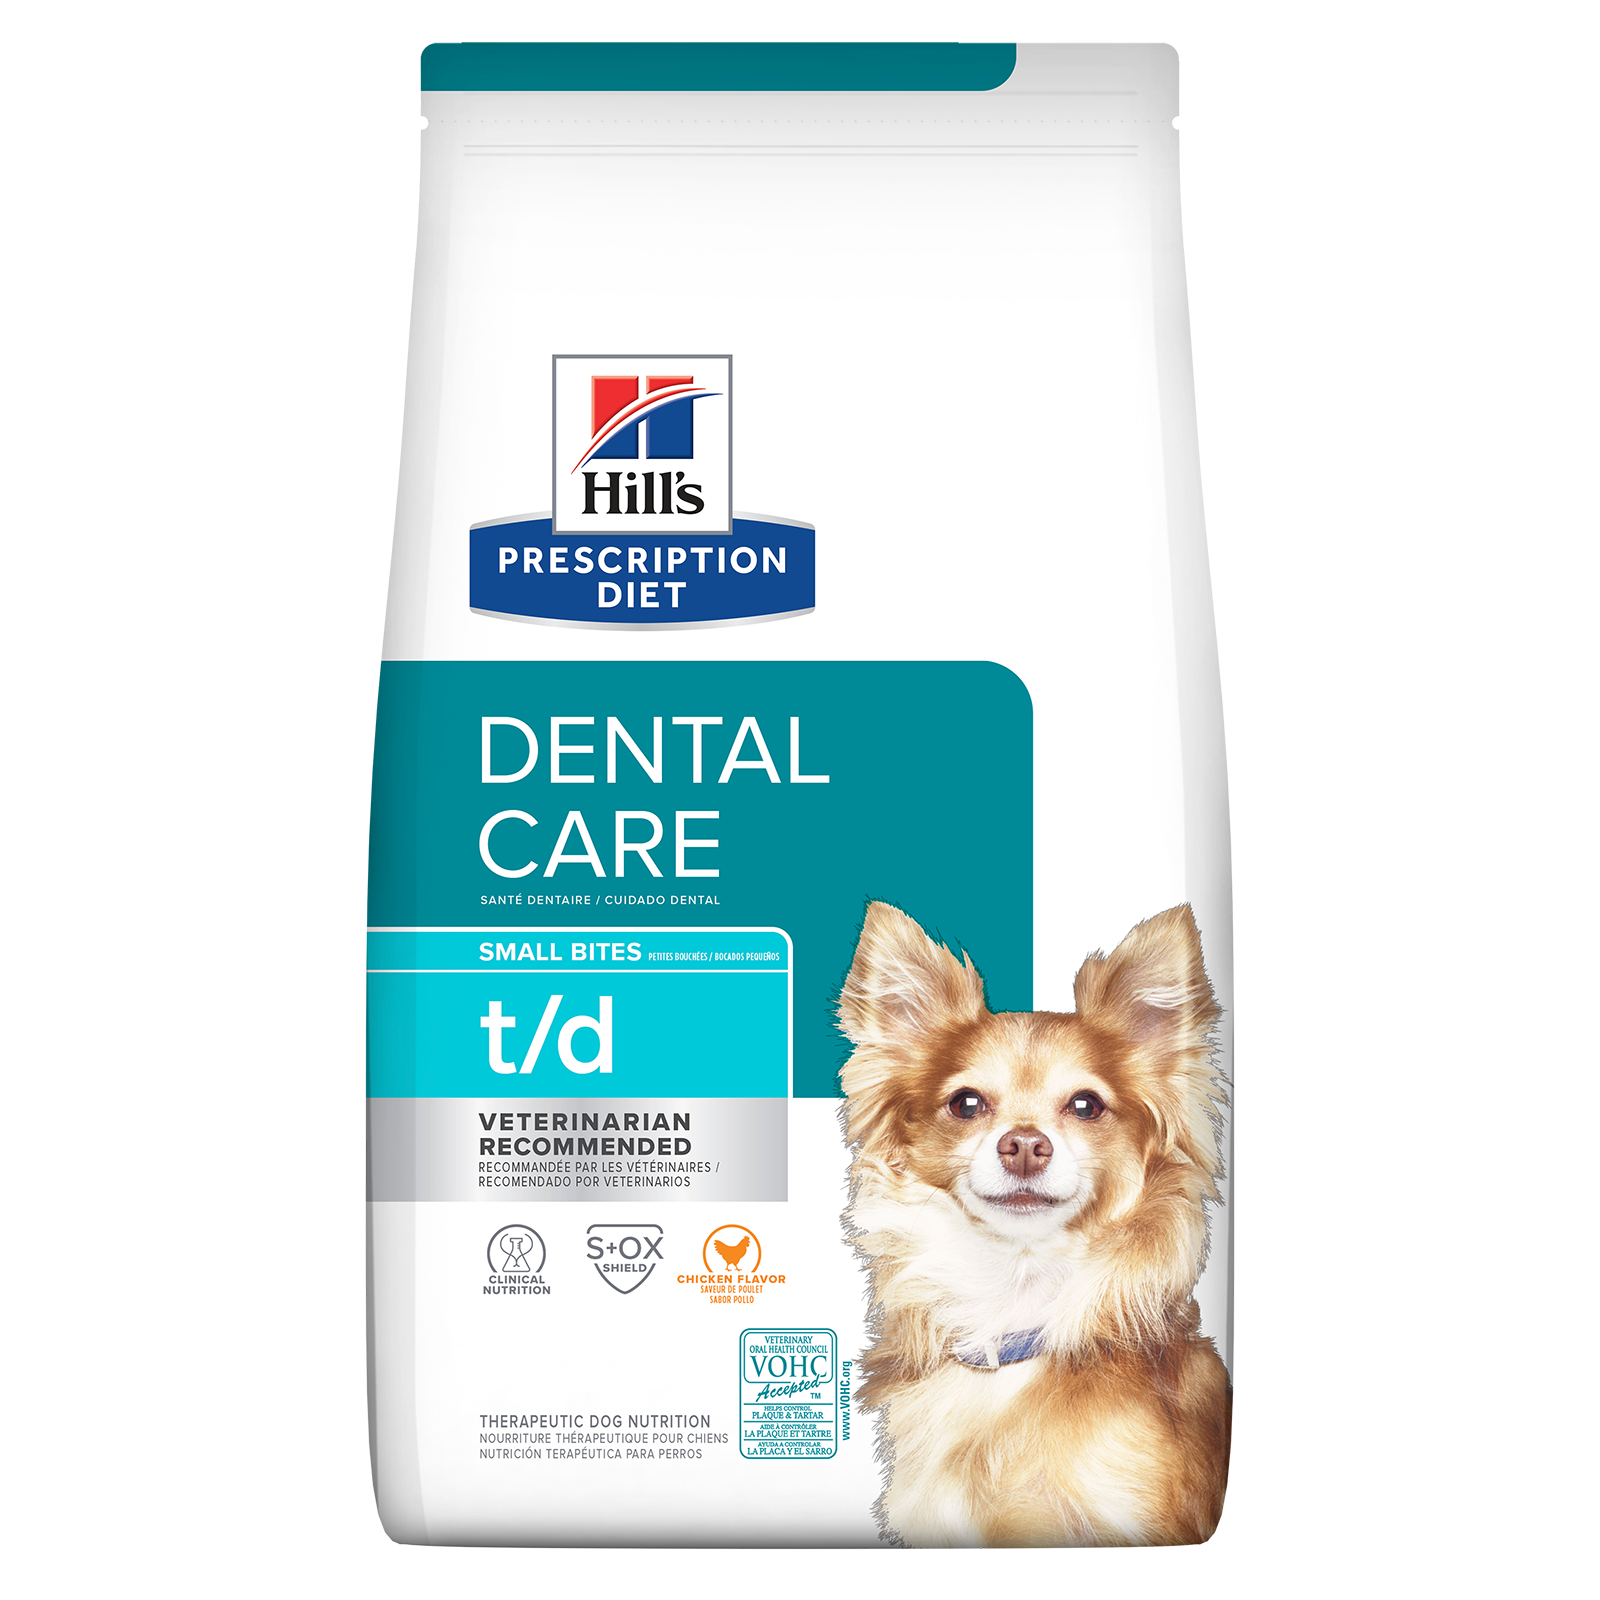 Hill's Prescription Diet Dog Food t/d Small Bites Dental Care